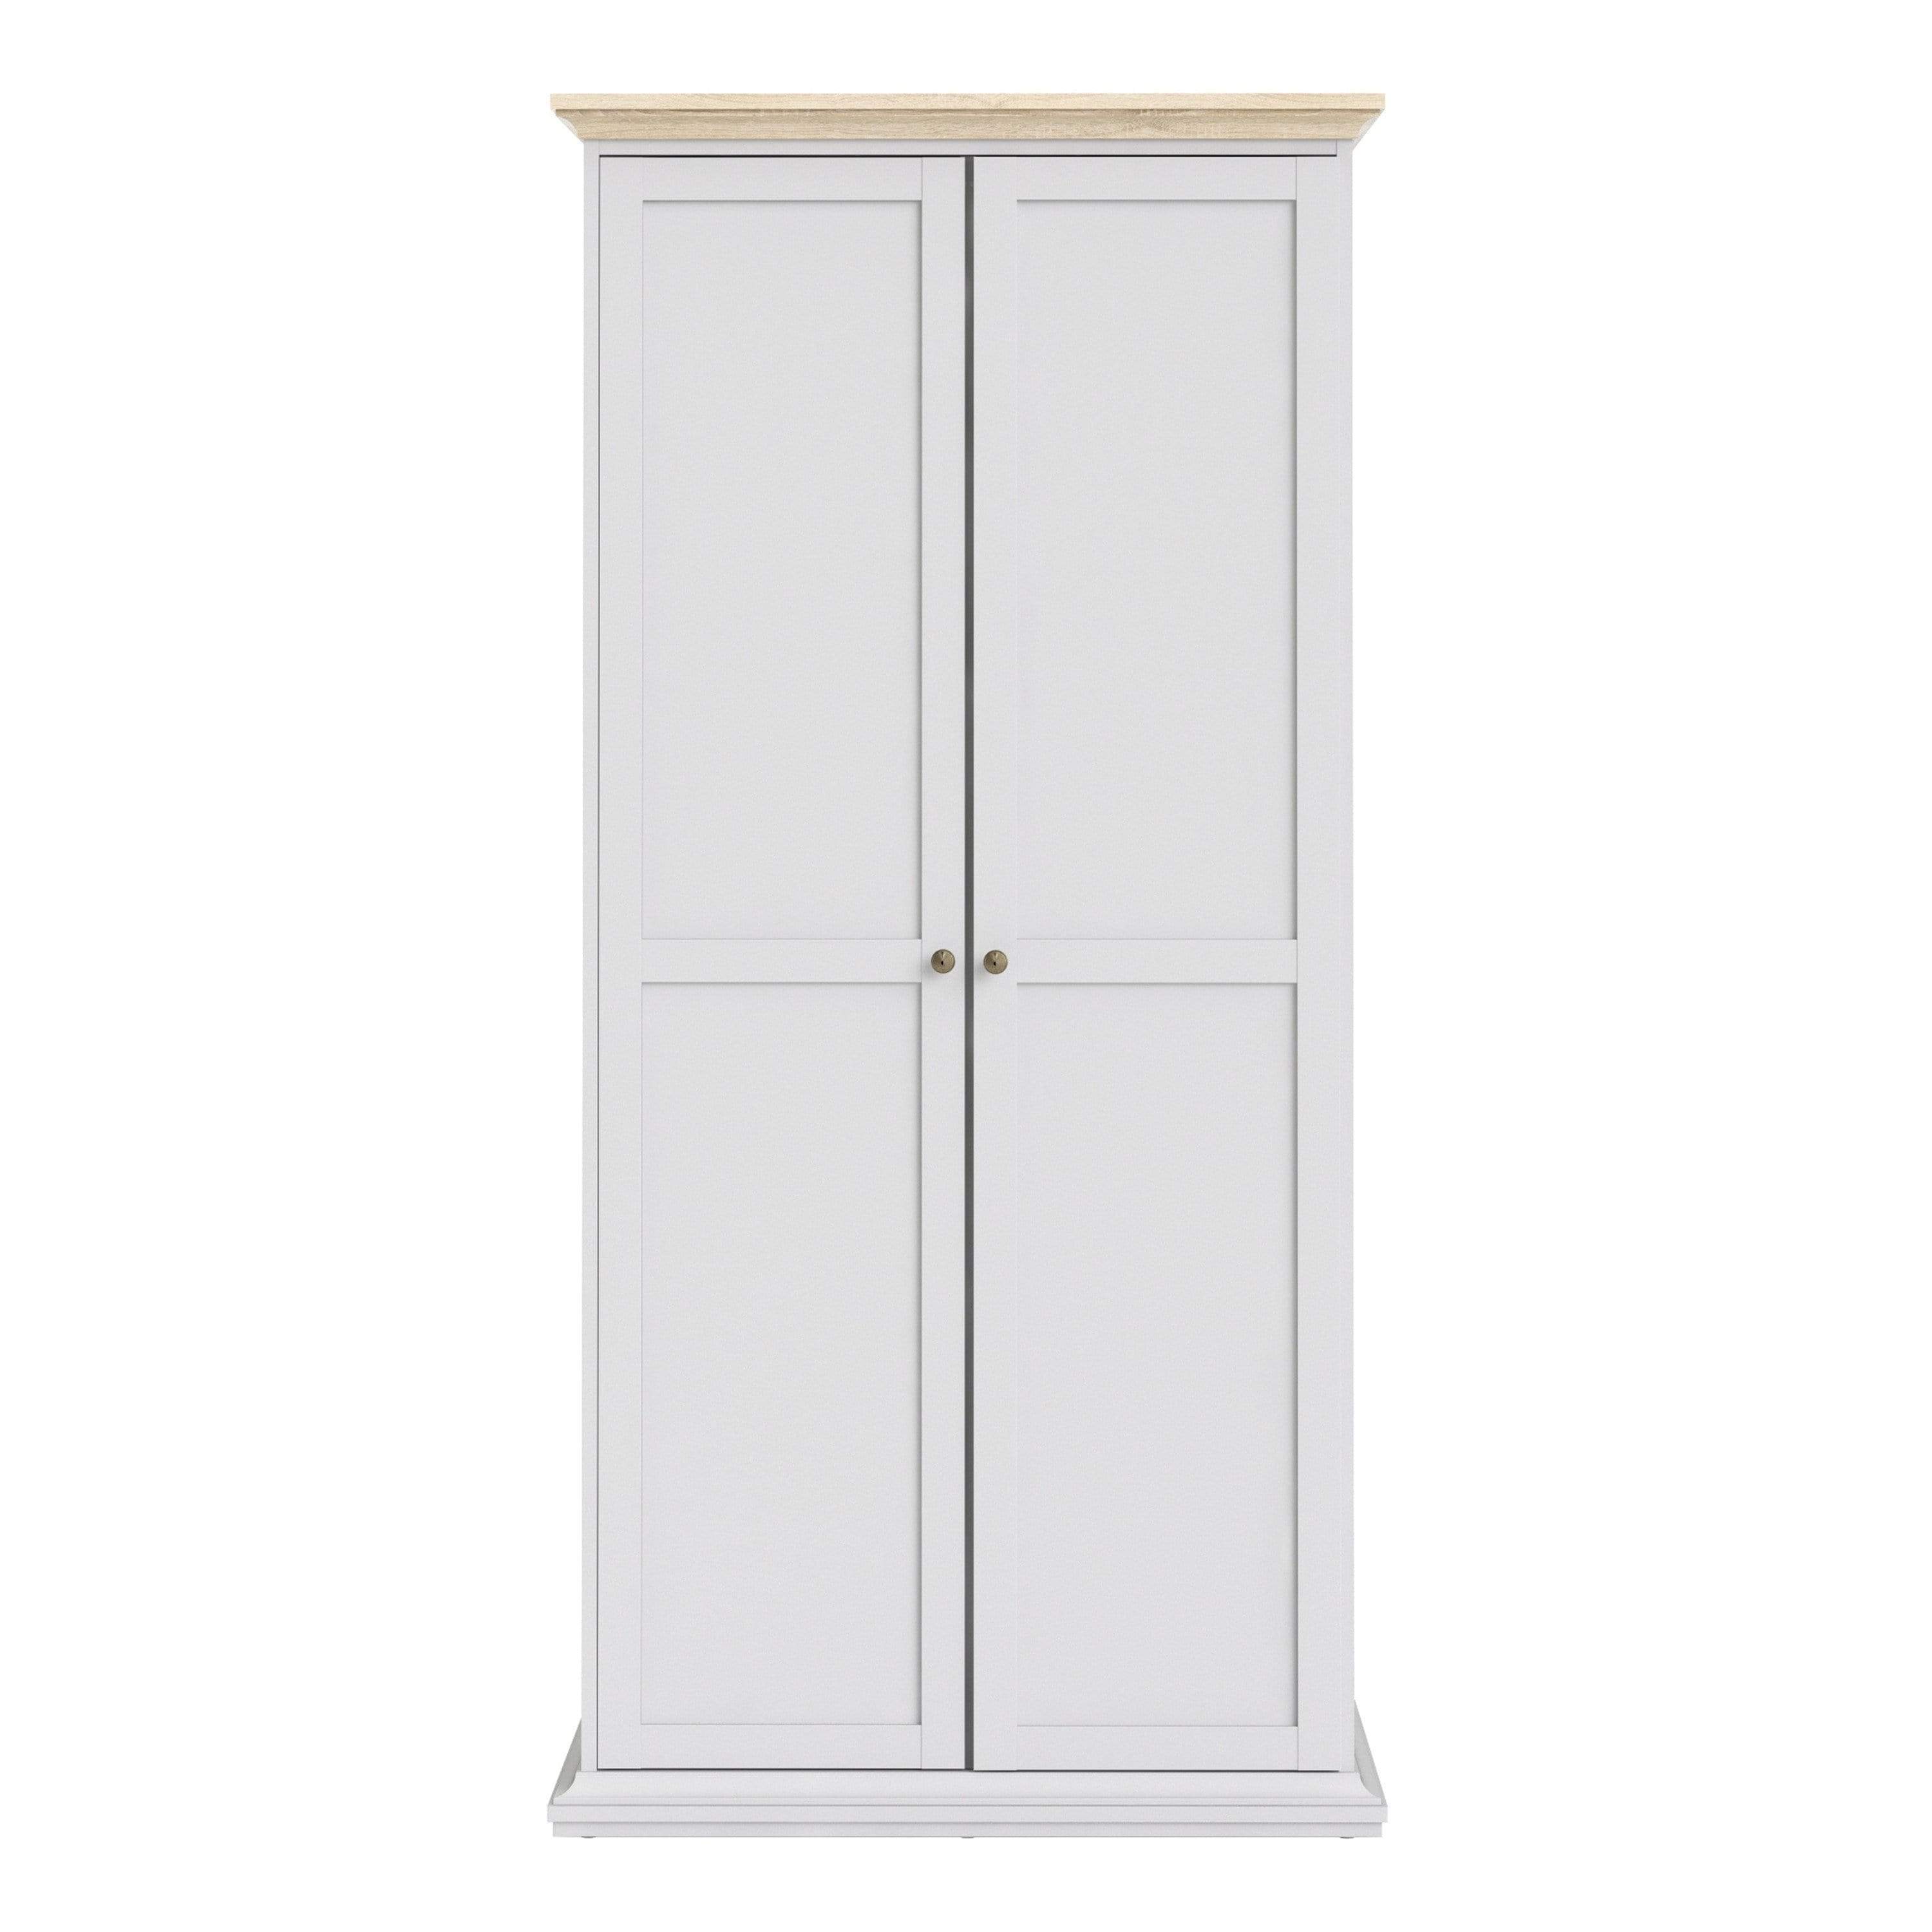 FTG Wardrobe Paris Wardrobe with 2 Doors in White and Oak Bed Kings